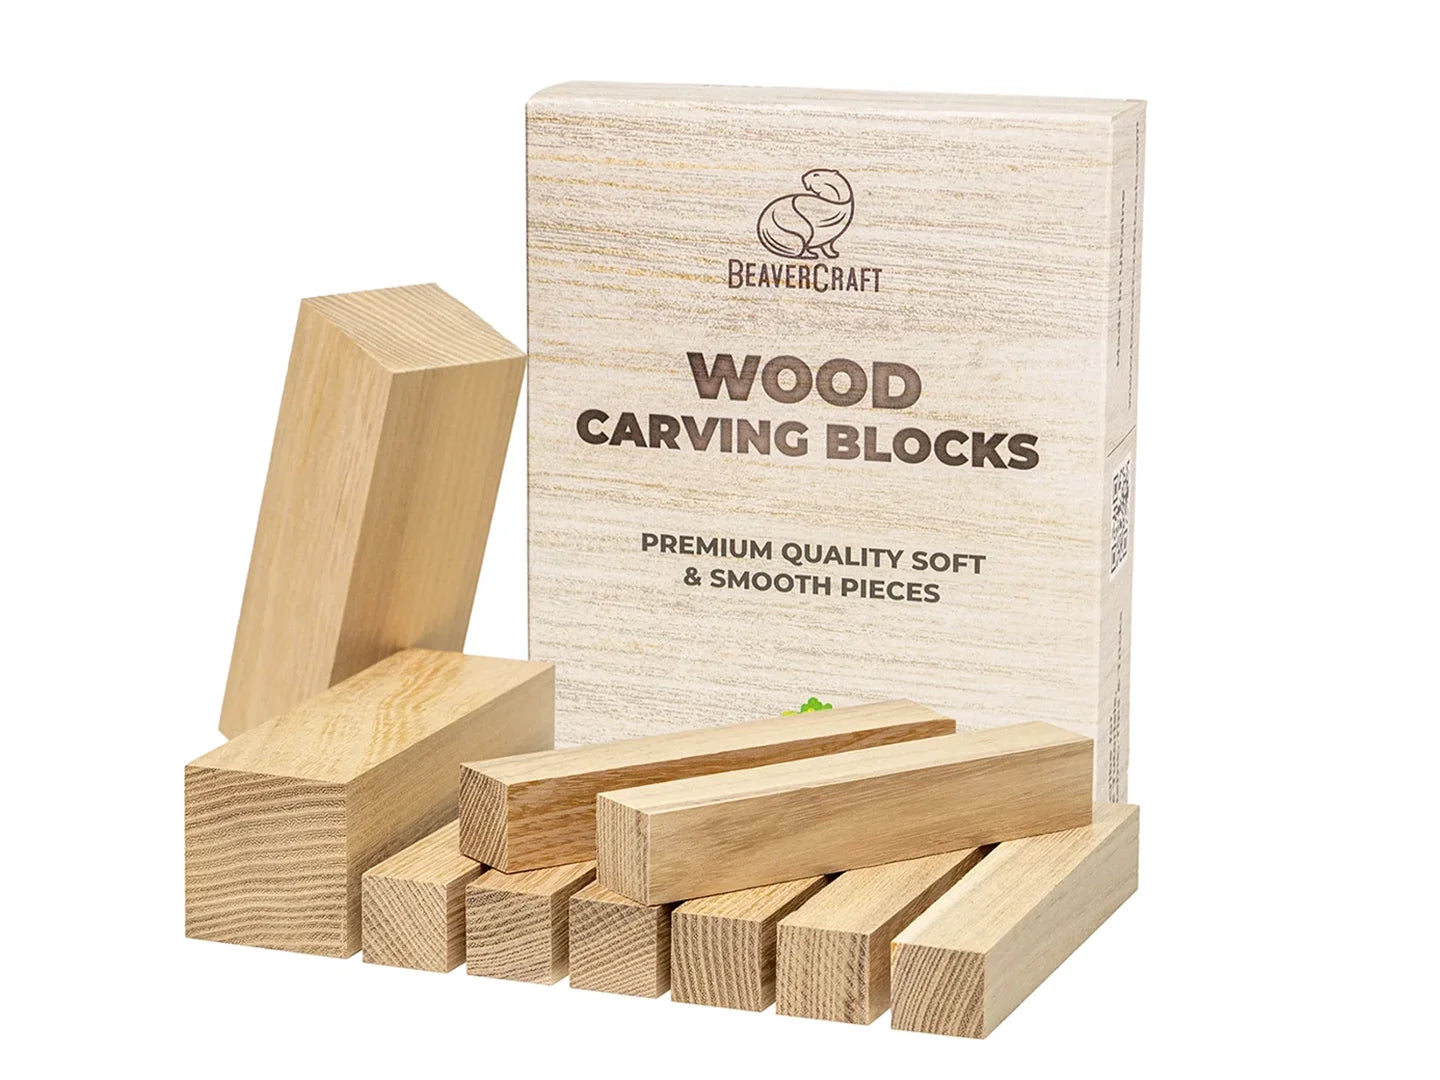 12Pcs Basswood Carving Block Natural Soft 3 Sizes Carving